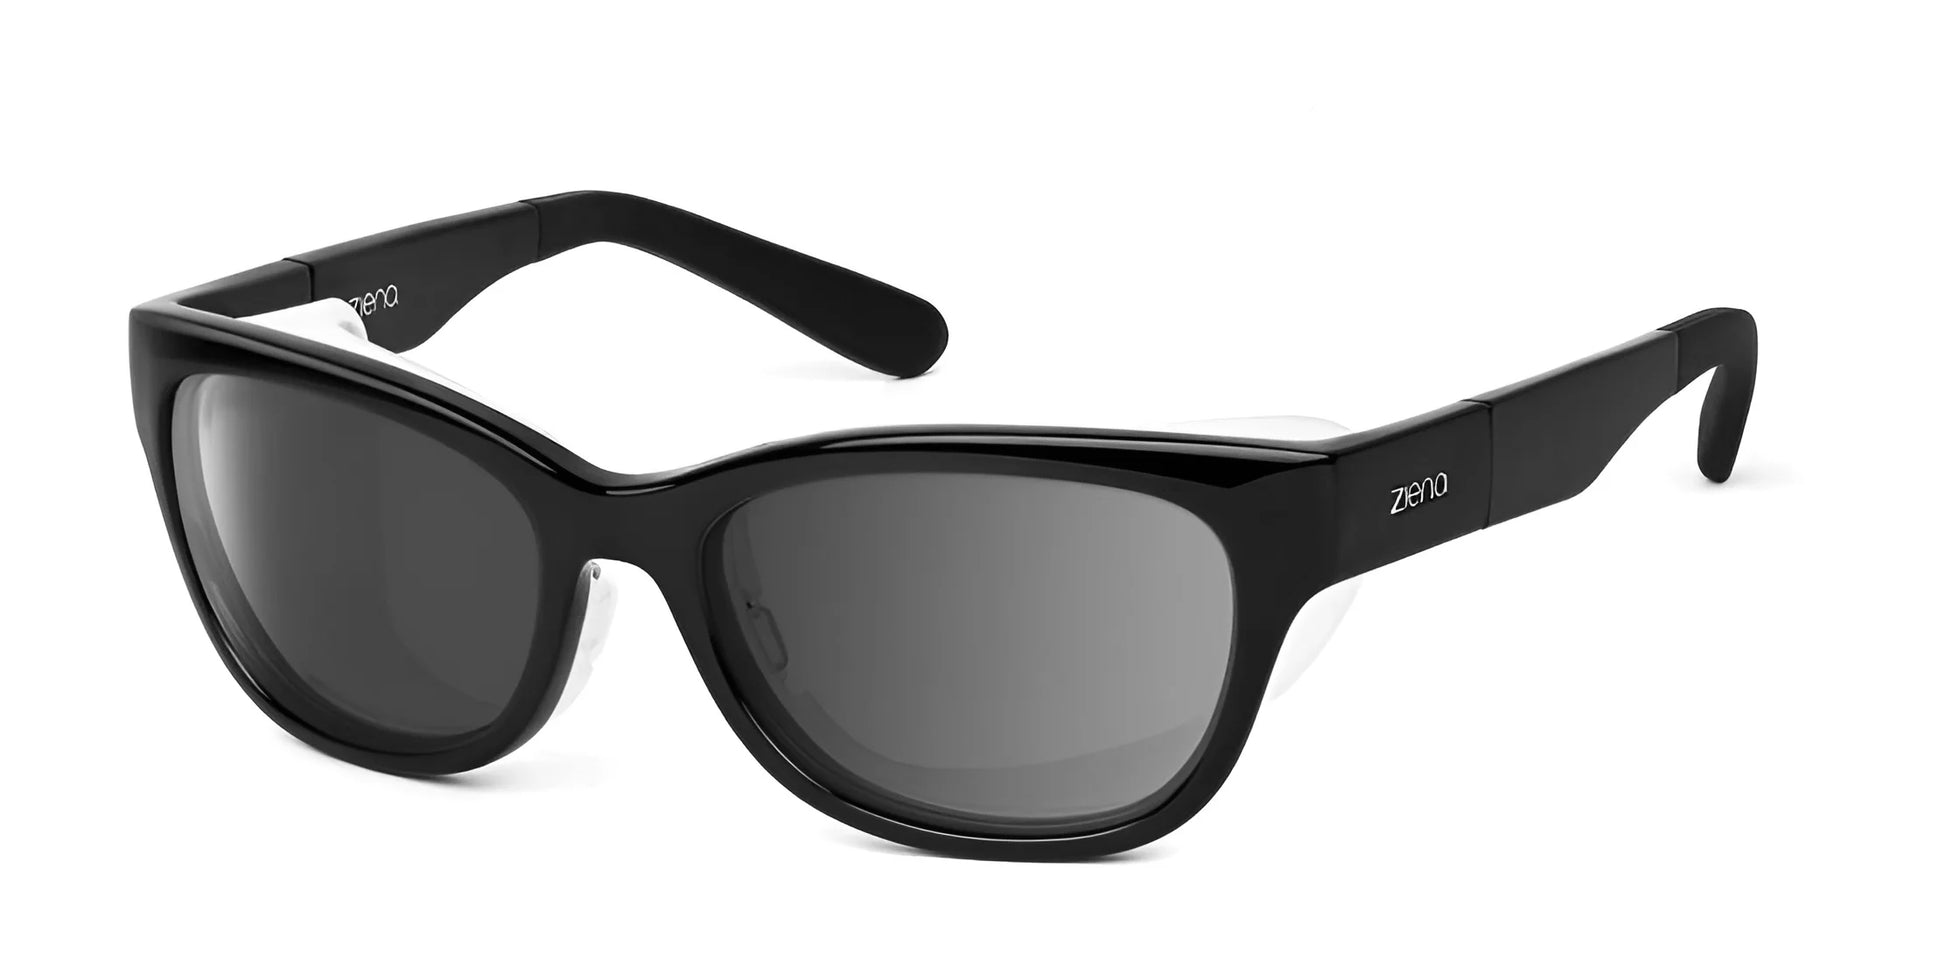 Ziena Marina Sunglasses Glossy Black / DARKshift™ Photochromic - Clr to DARK Gray / Frost